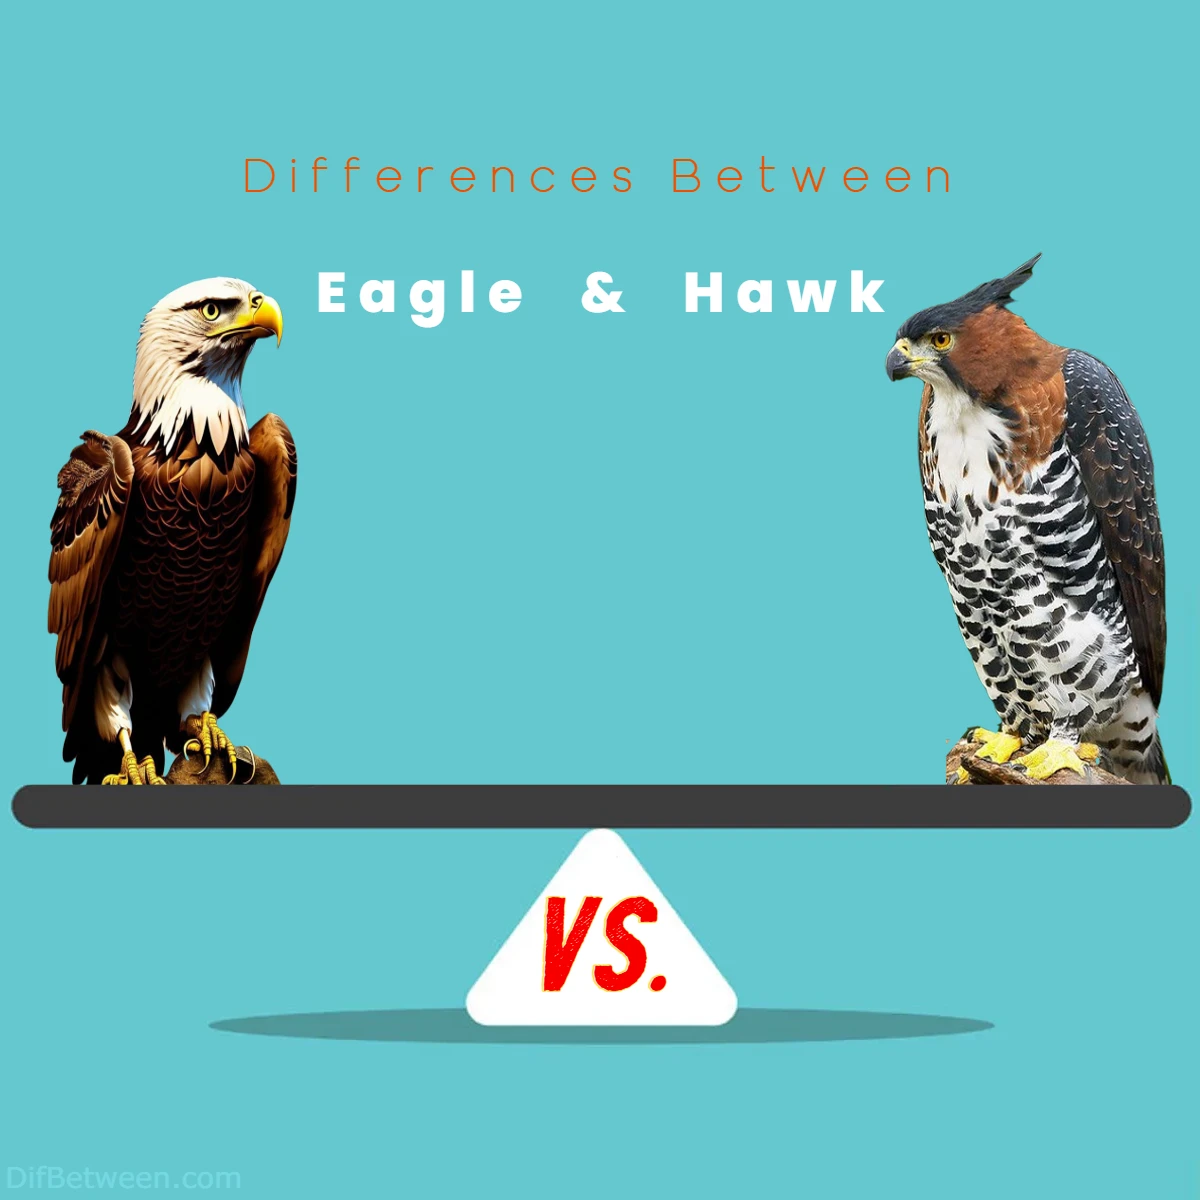 Differences Between Eagle vs Hawk